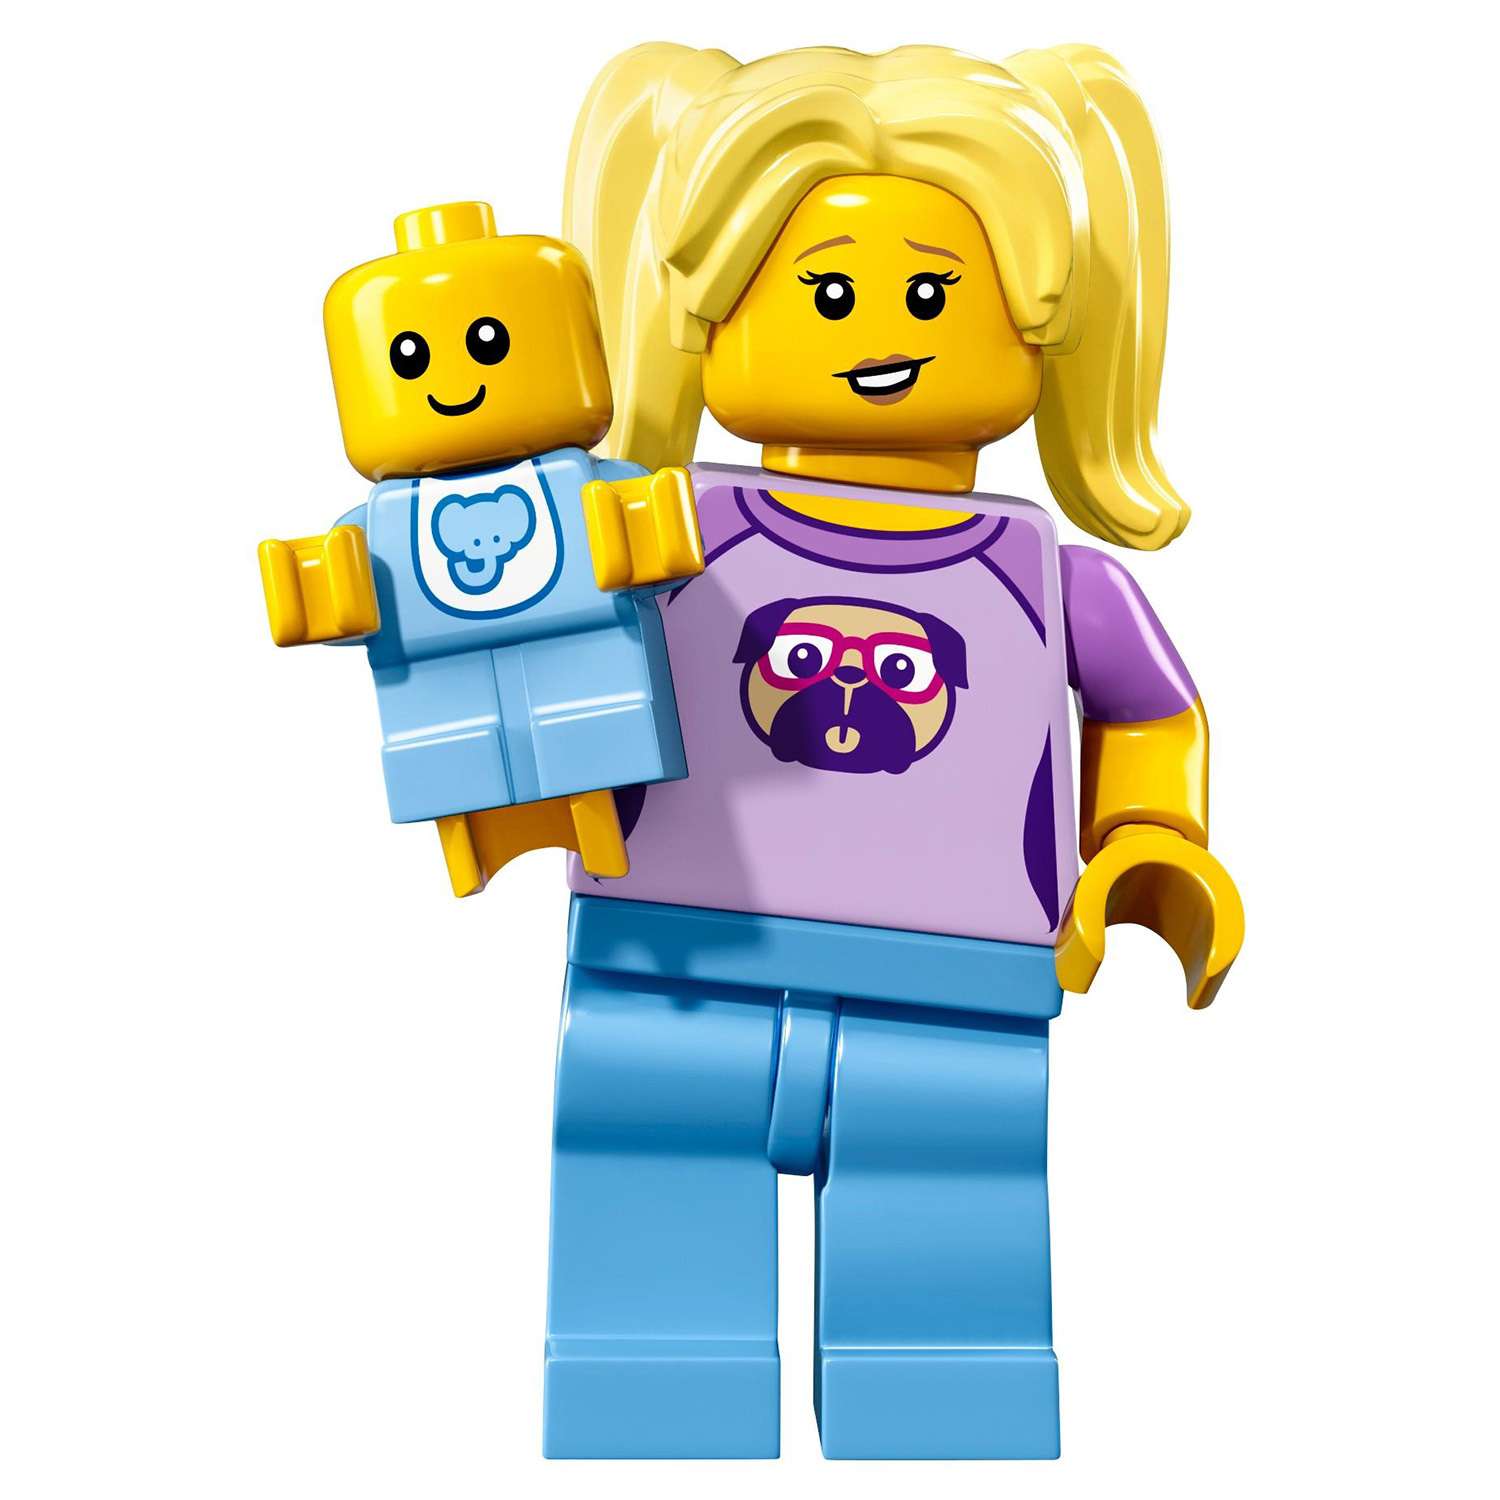 Конструктор LEGO Minifigures Confidential Minifigures Sept. 2016 (71013) - фото 15